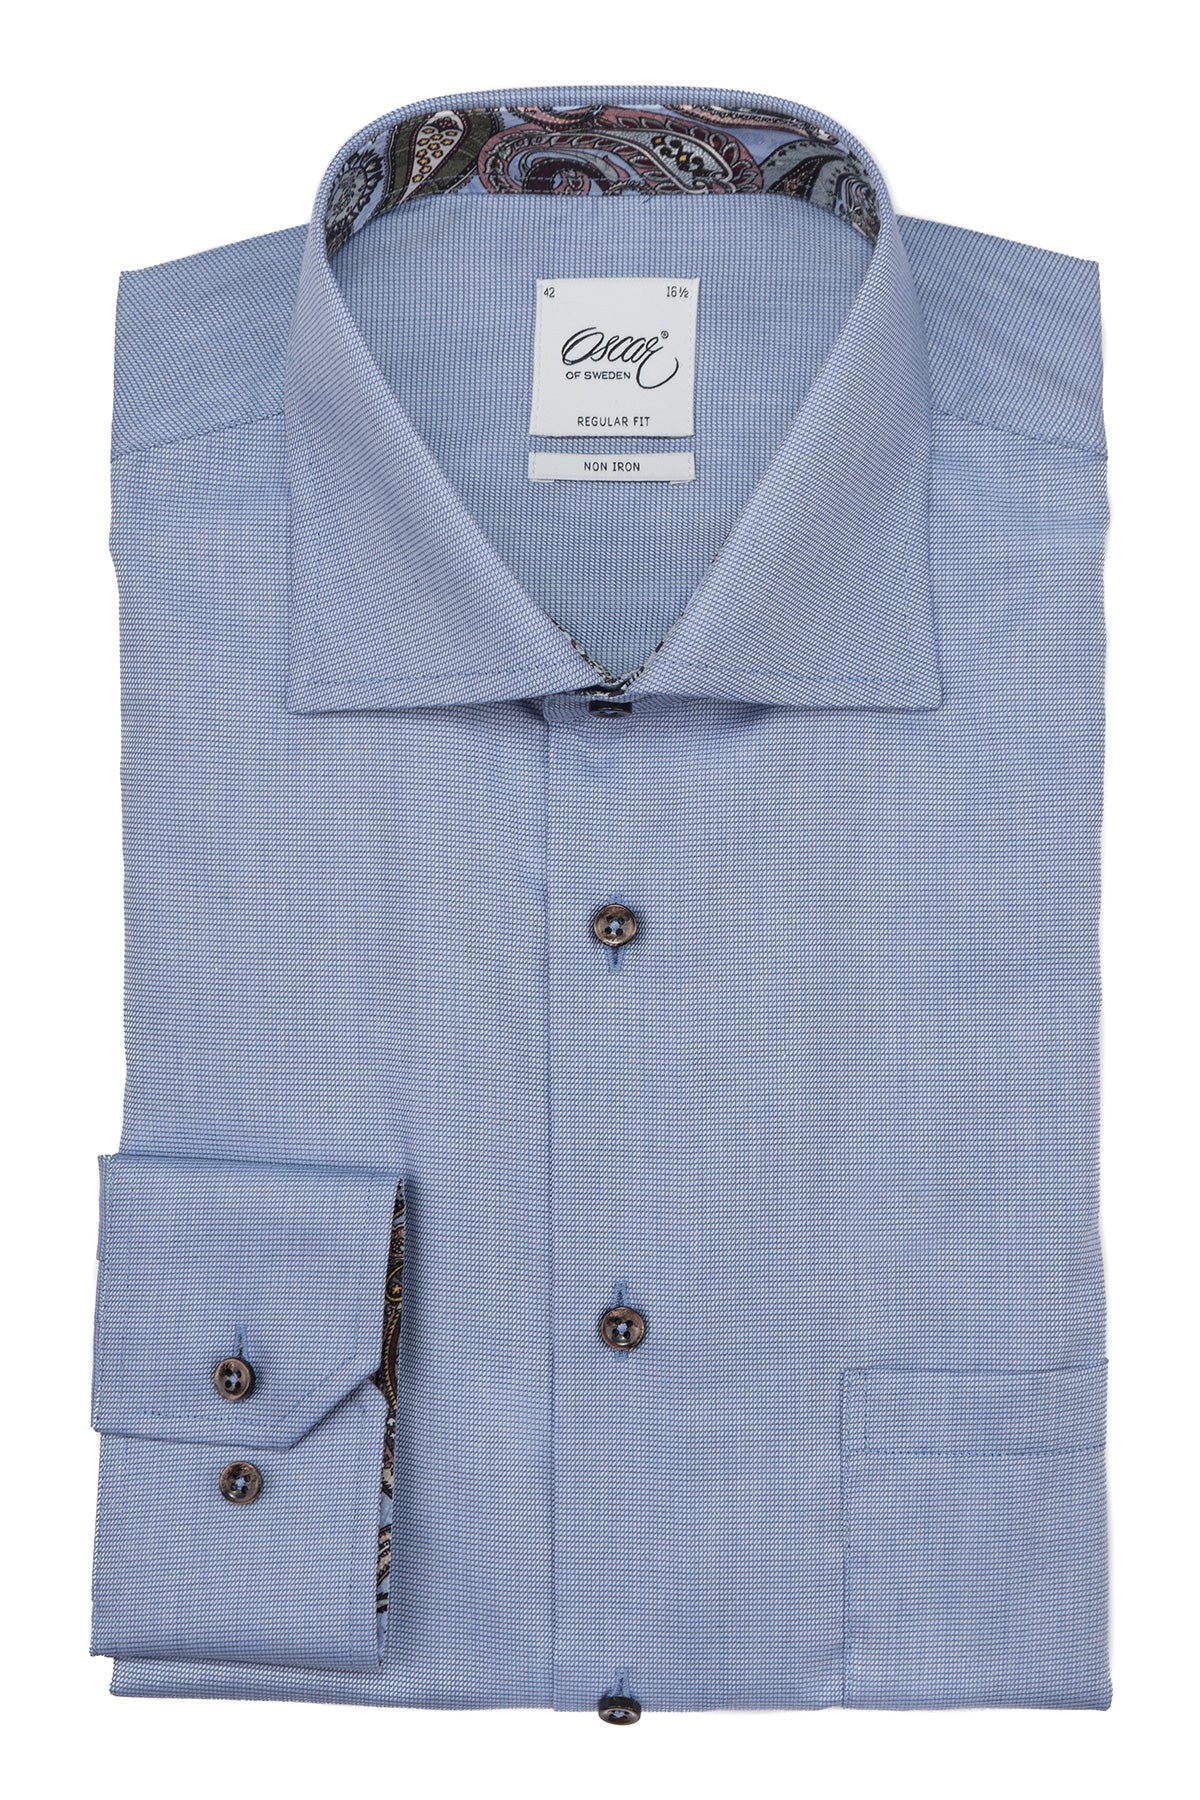 Blue regular fit shirt with contrast details